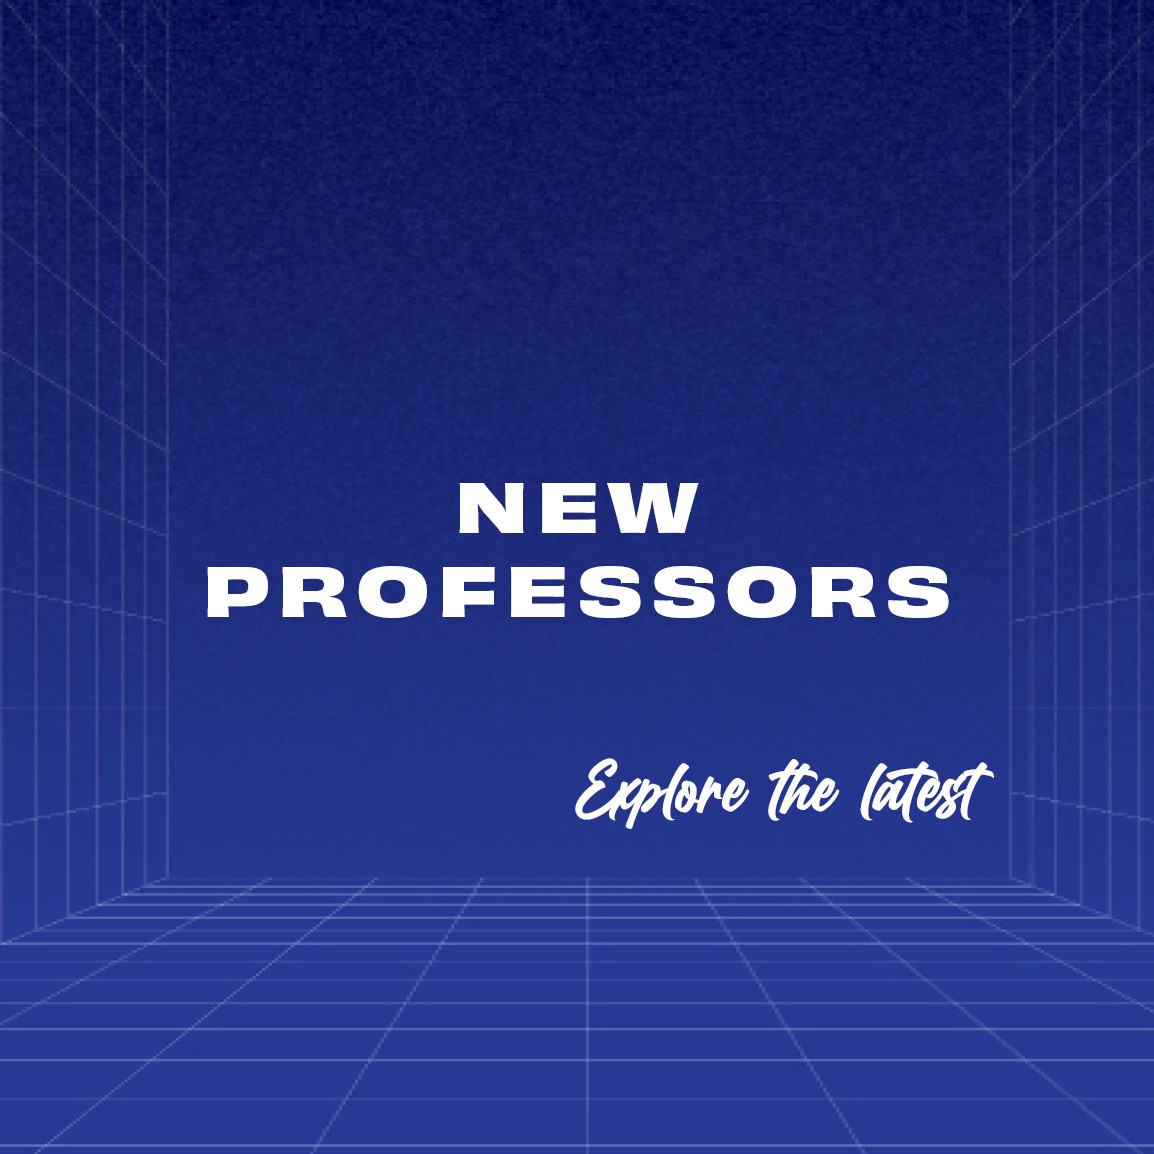 New Professors - Explore the latest